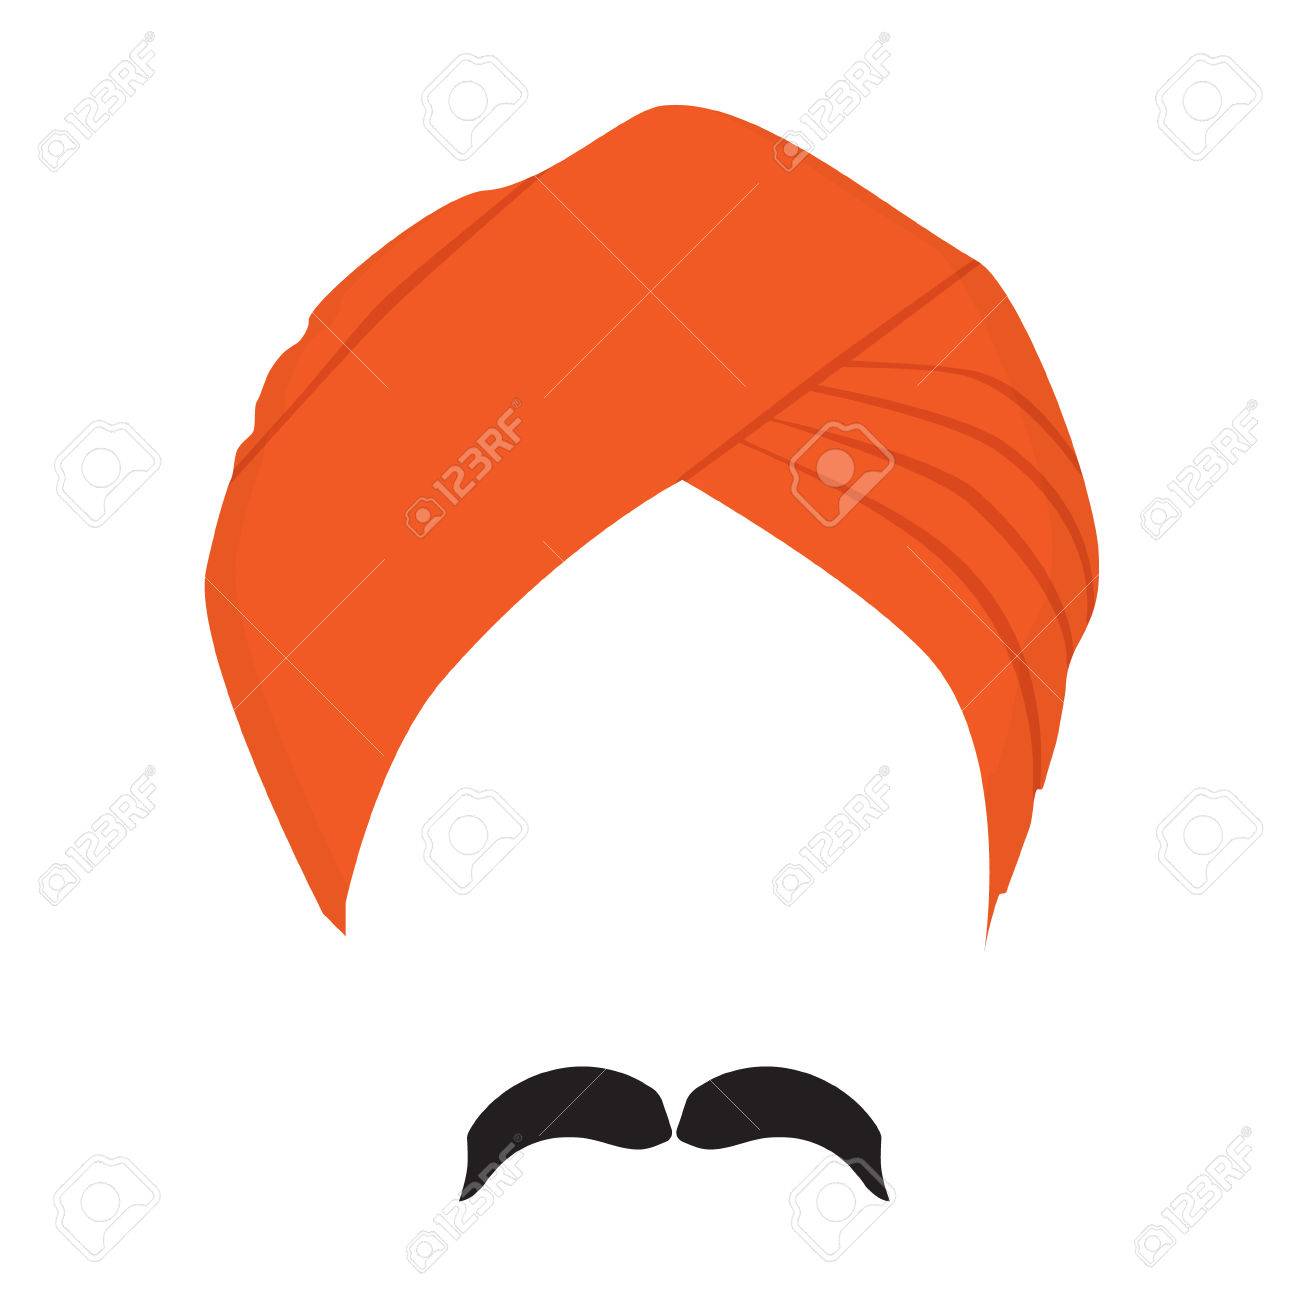 Vector - Vector illustration orange turban headdress and mustache isolated  on white background. Sikh turban icon. Indian man character.